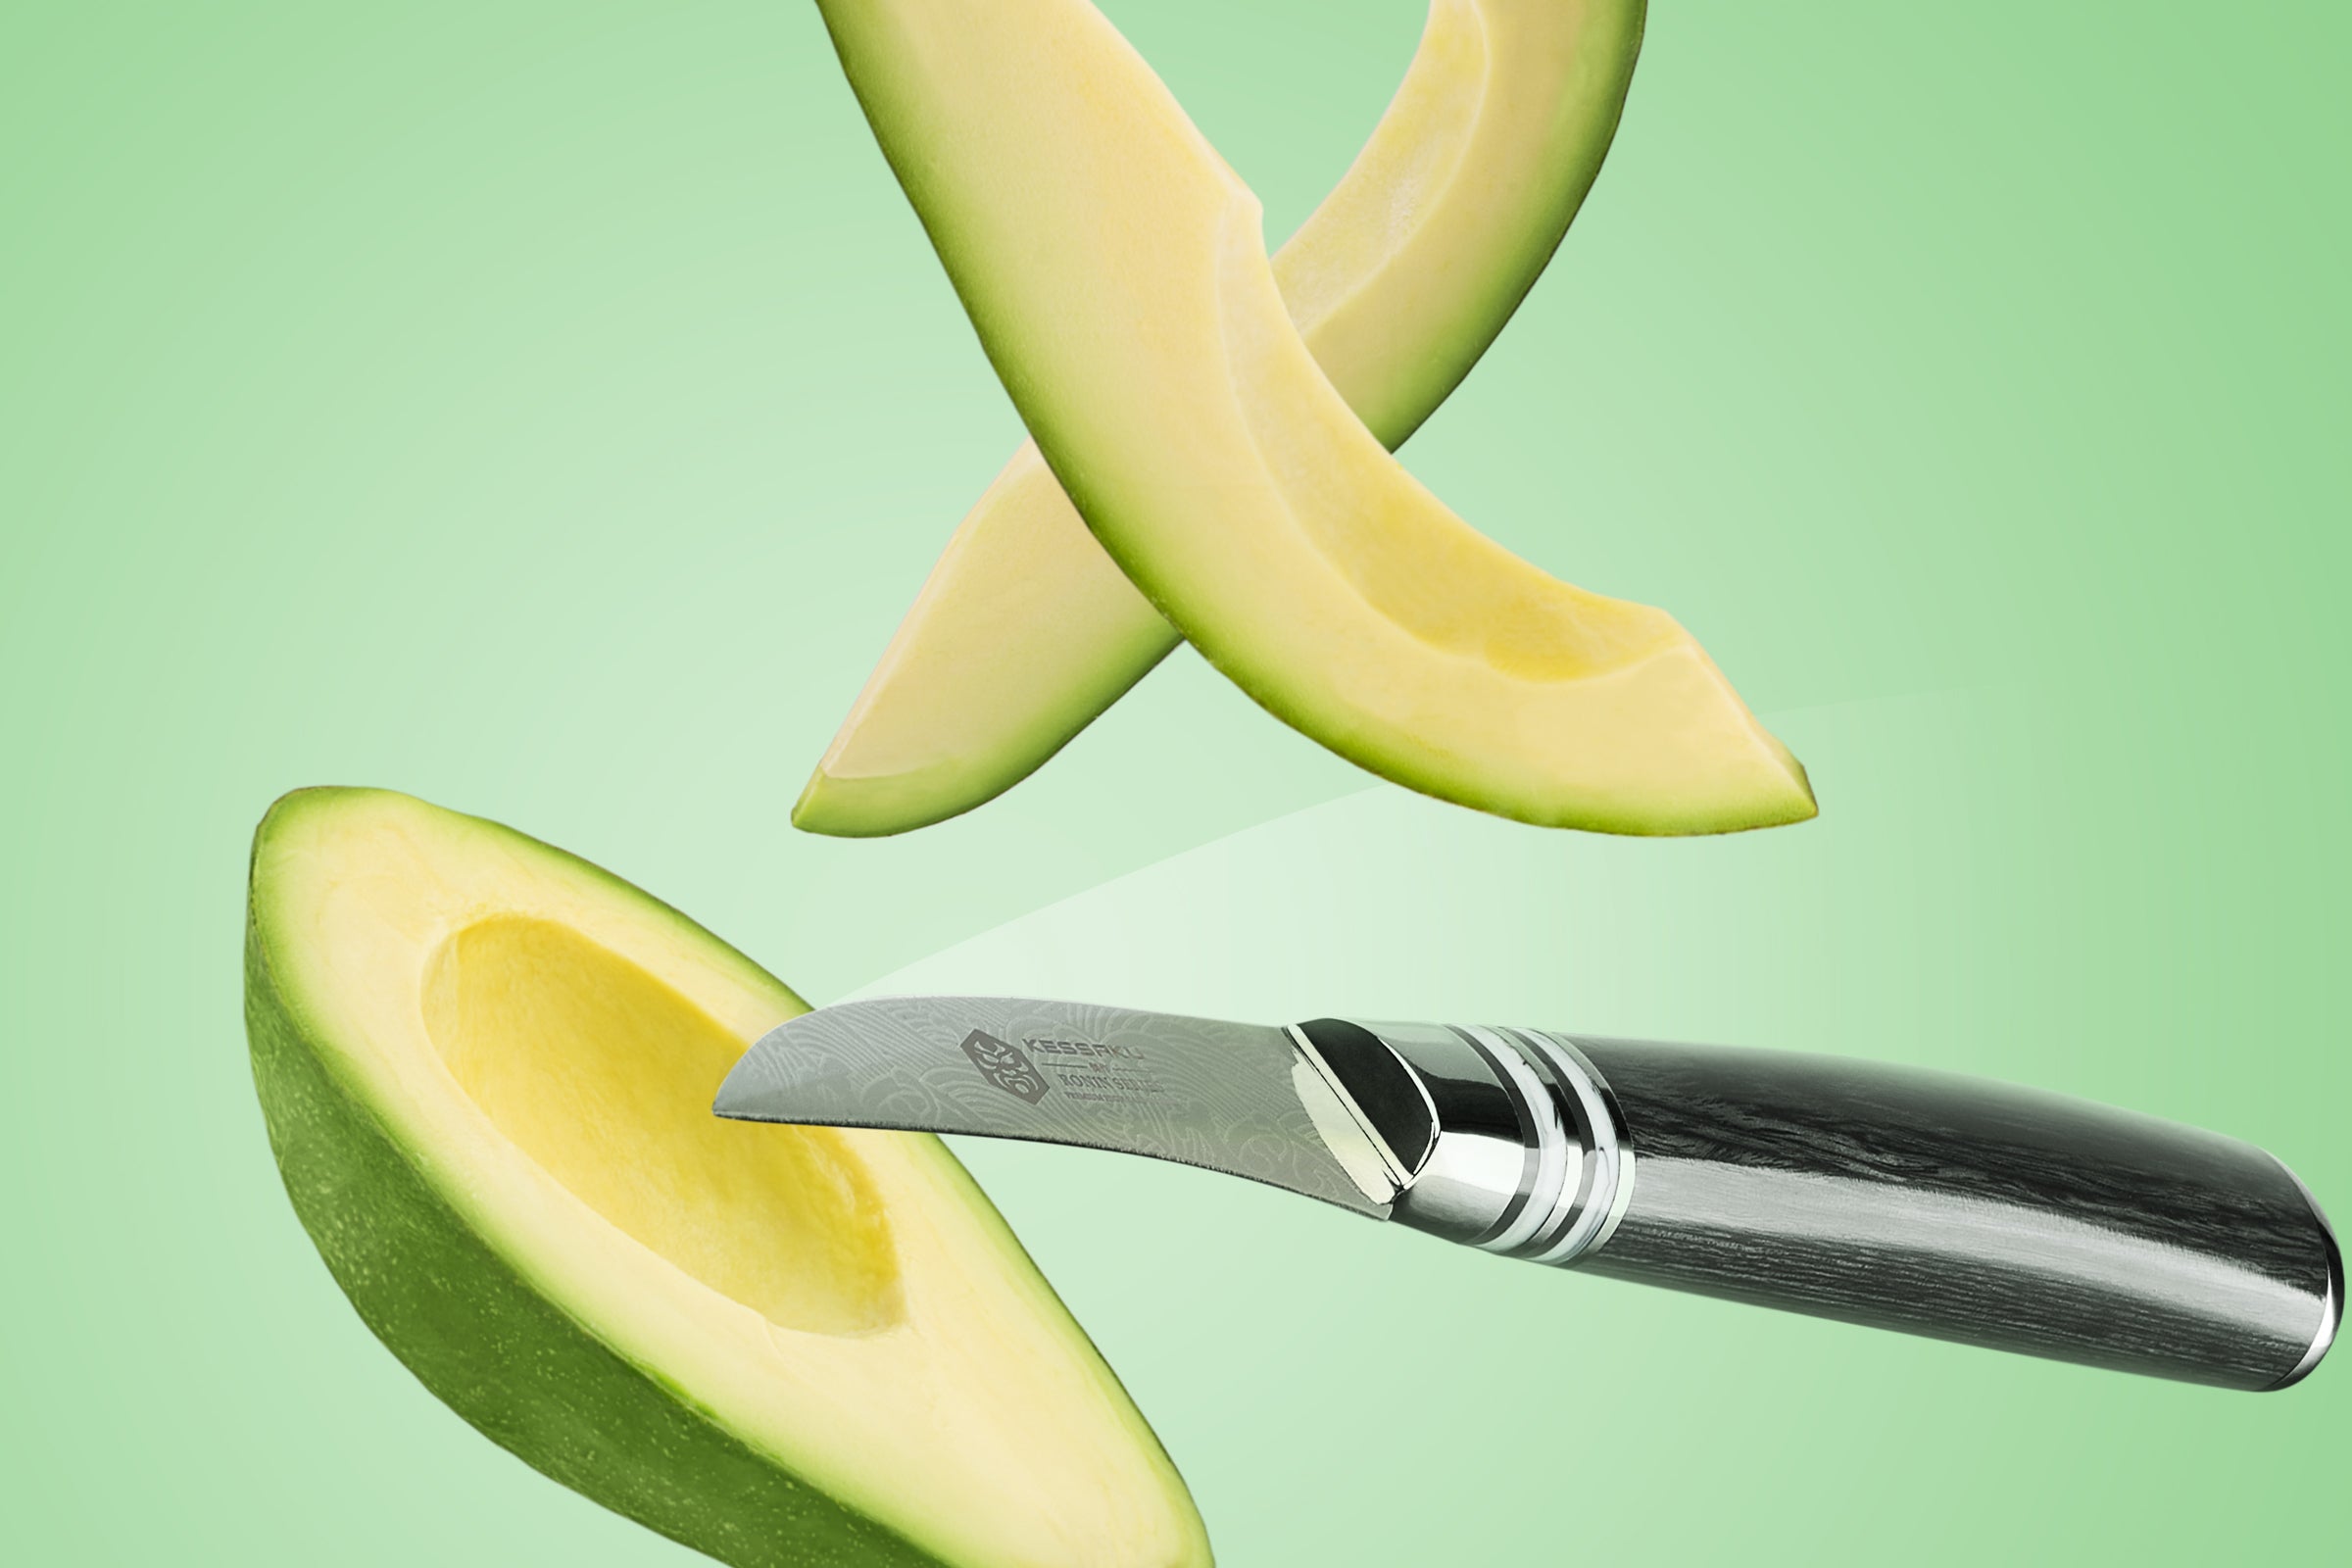 The Ronin Bird's Beak Knife pitting and slicing an avocado.